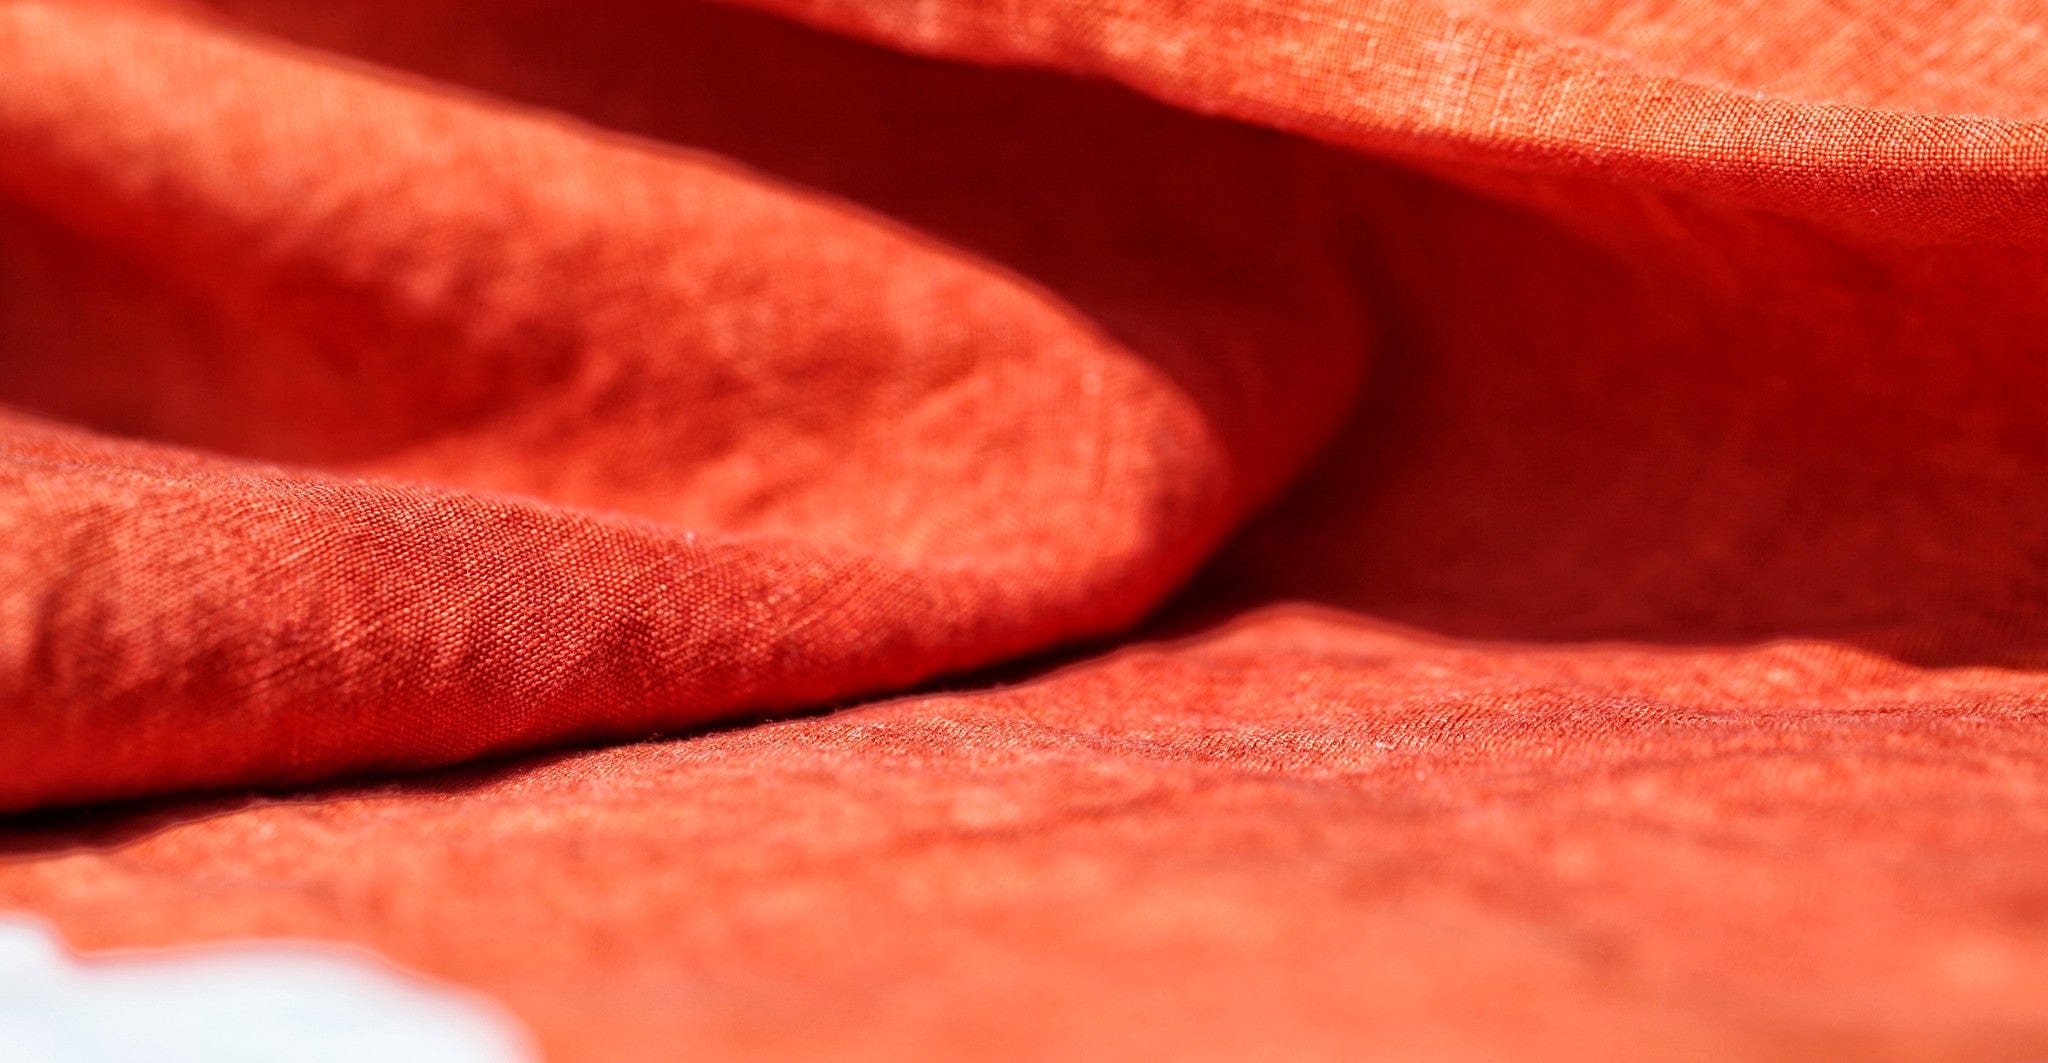 Full Field Linen Napkin in Rust Red, 50x50cm